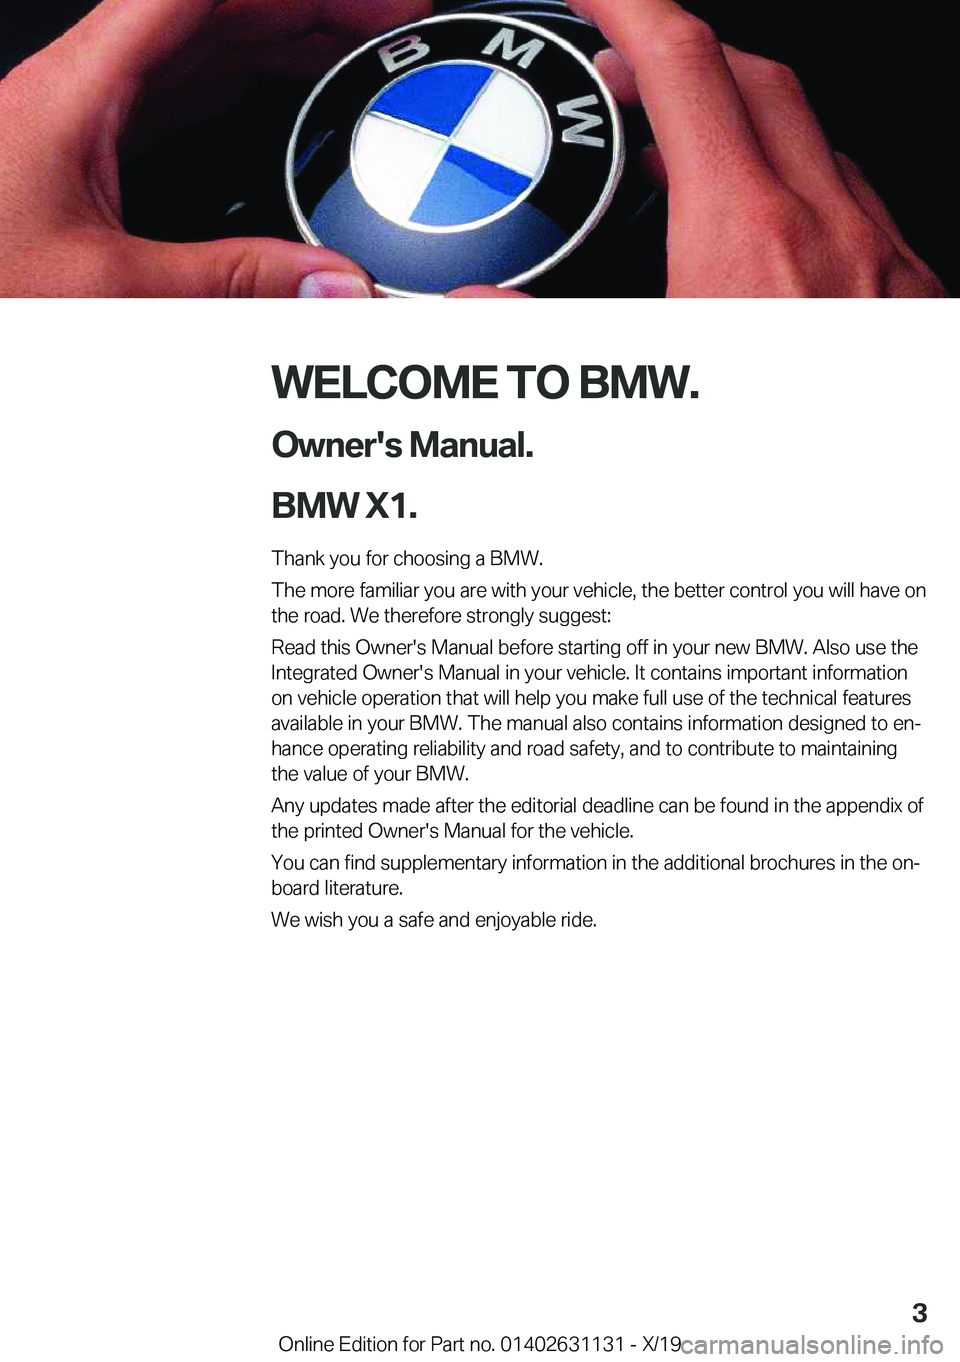 BMW X1 2020  Owners Manual �W�E�L�C�O�M�E��T�O��B�M�W�.�O�w�n�e�r�'�s��M�a�n�u�a�l�.
�B�M�W��X�1�.
�T�h�a�n�k��y�o�u��f�o�r��c�h�o�o�s�i�n�g��a��B�M�W�.
�T�h�e��m�o�r�e��f�a�m�i�l�i�a�r��y�o�u��a�r�e��w�i�t�h�